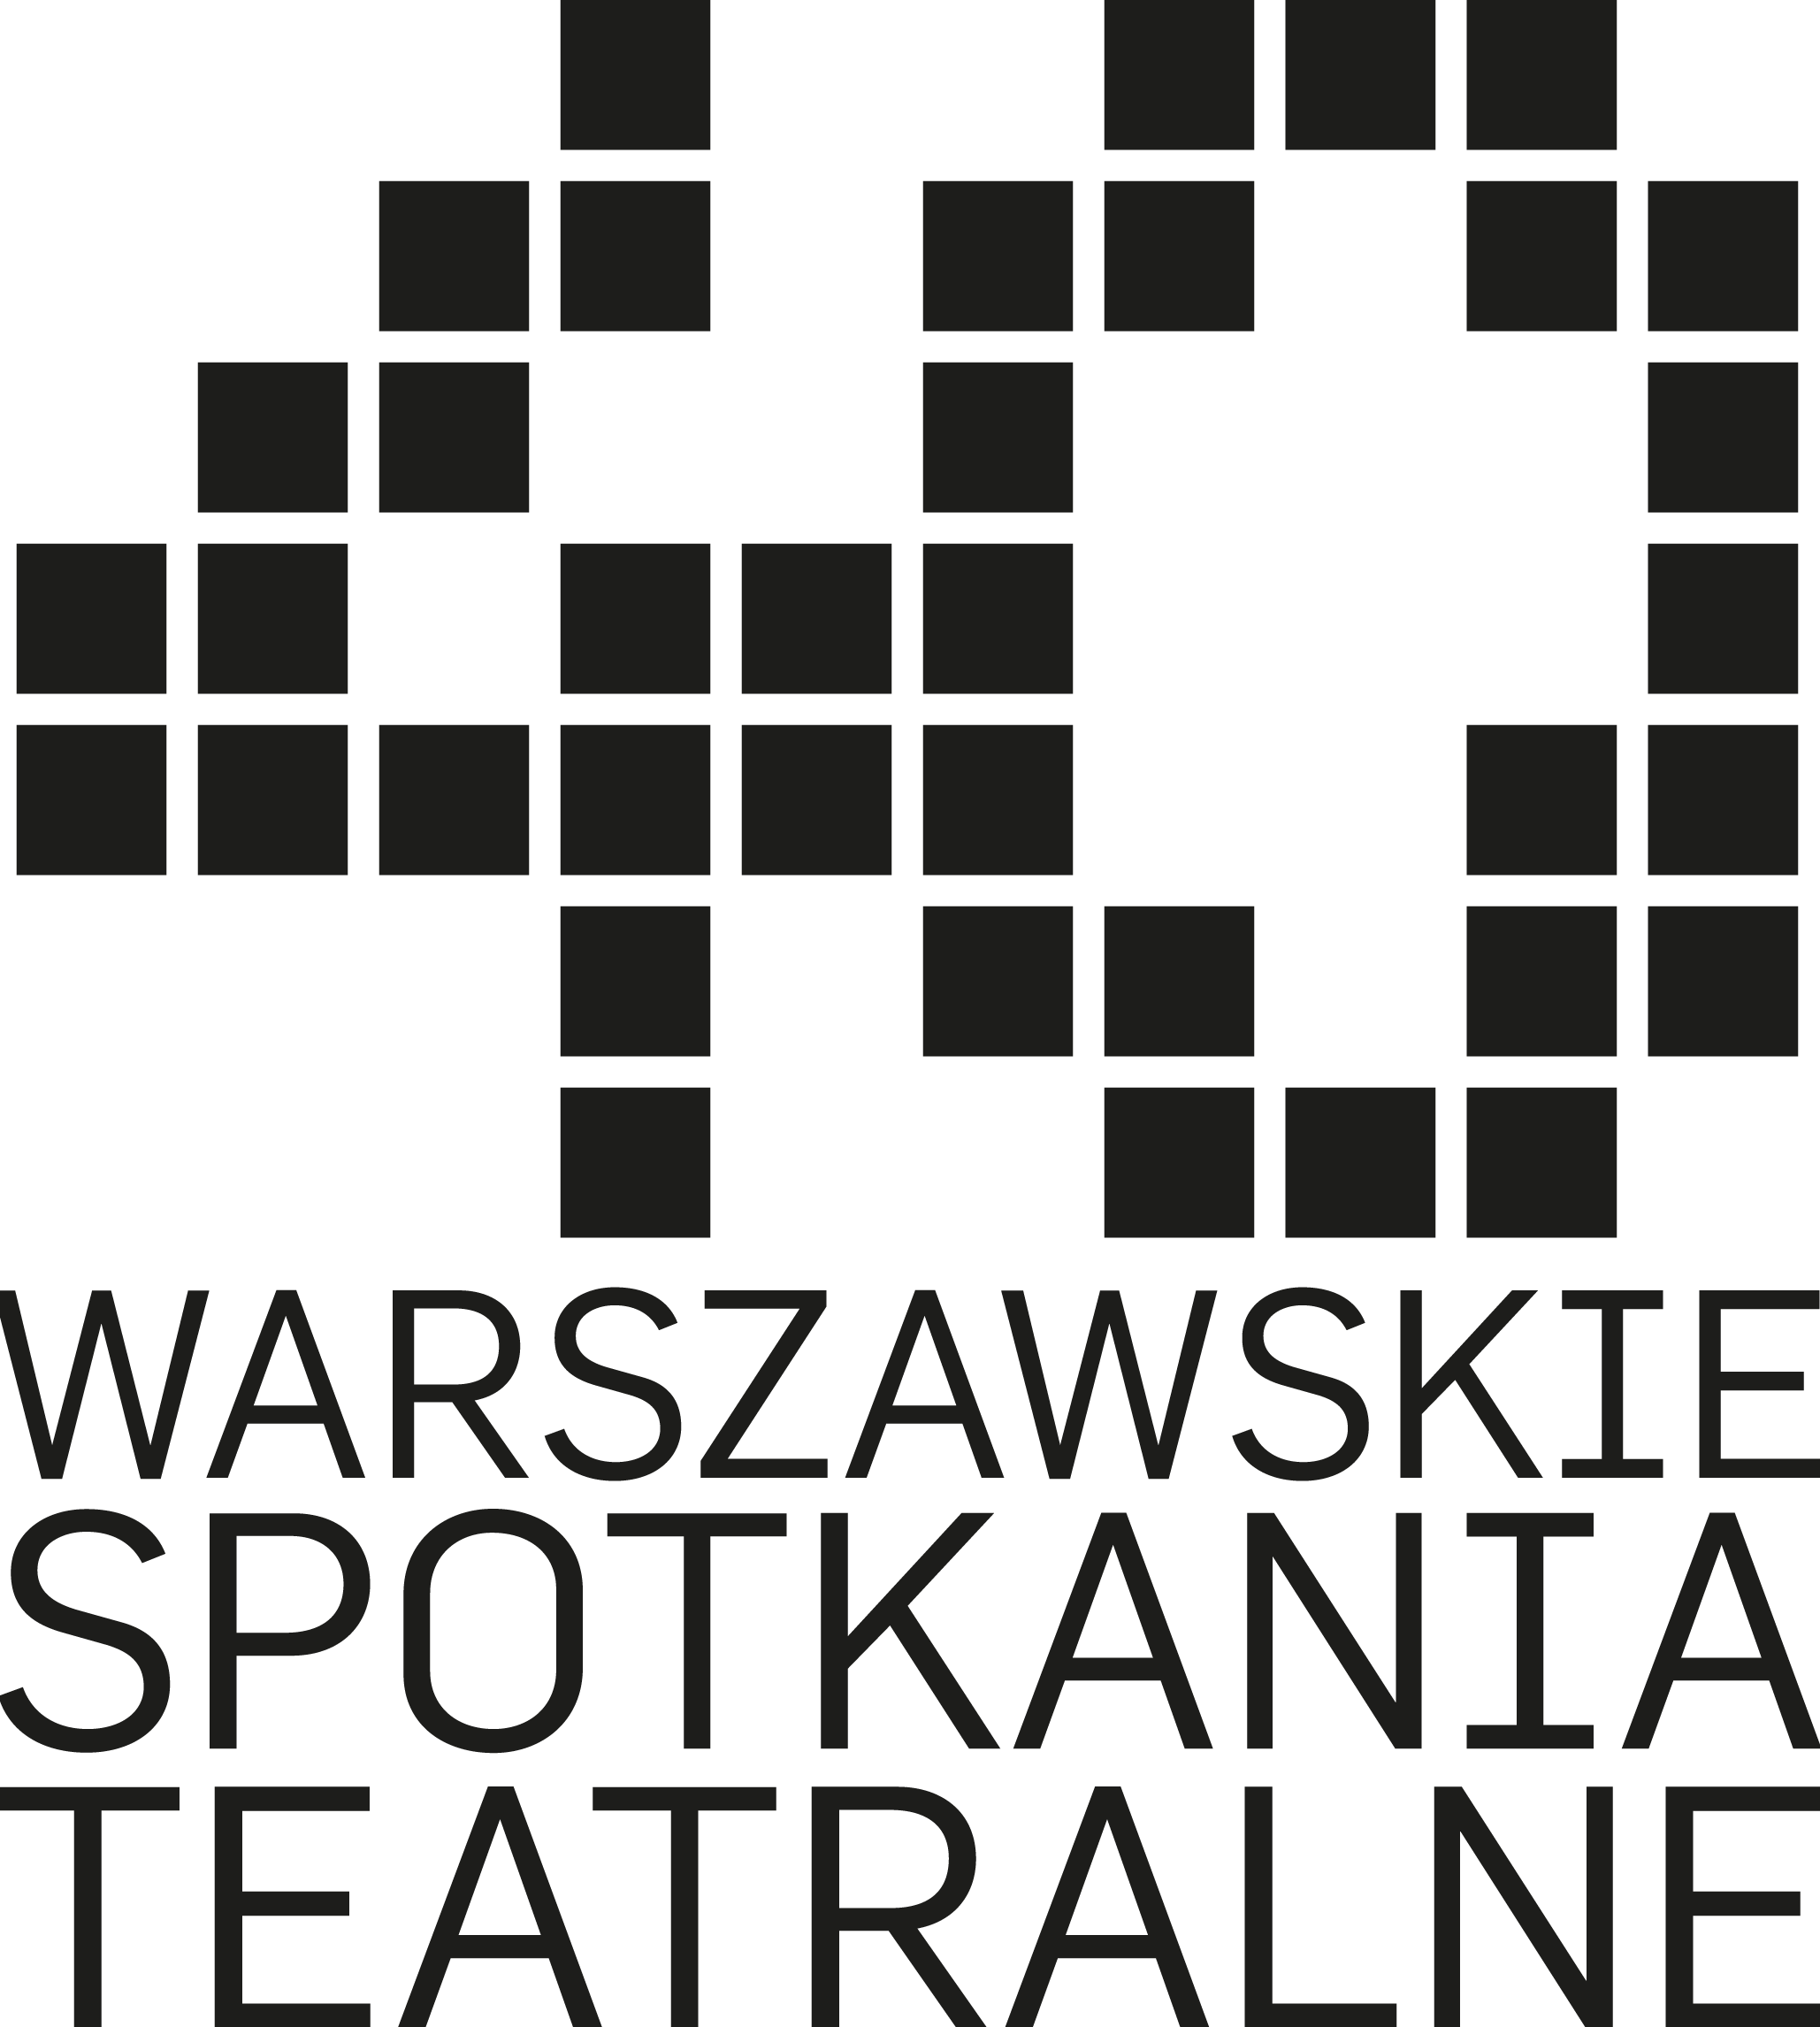 Warsaw Theater Meetings / 2020